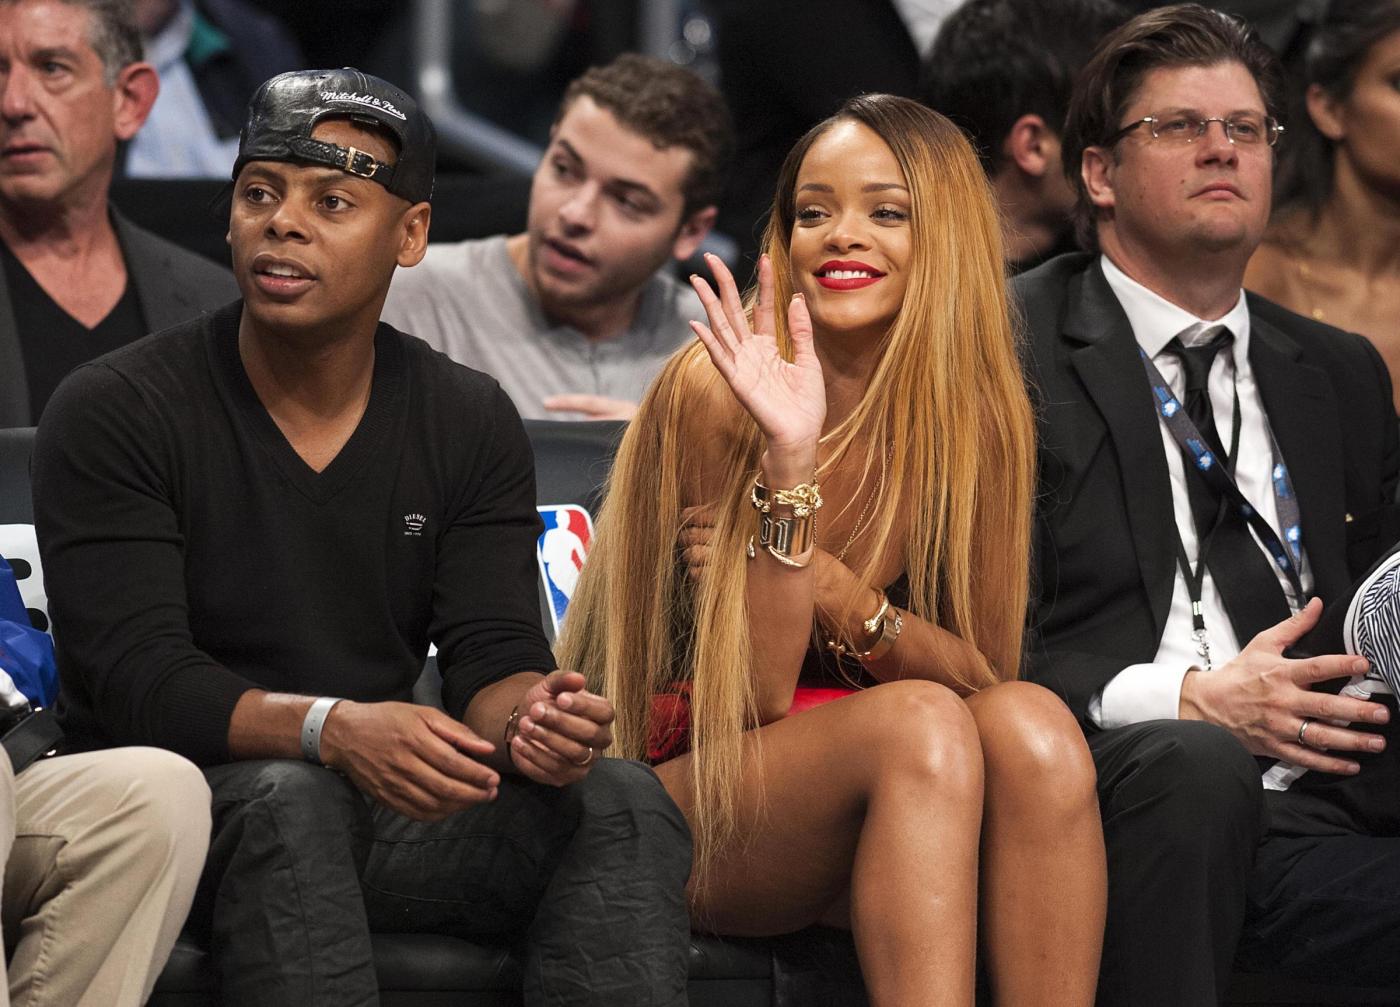 Rihanna alla partita di basket senza Chris Brown06